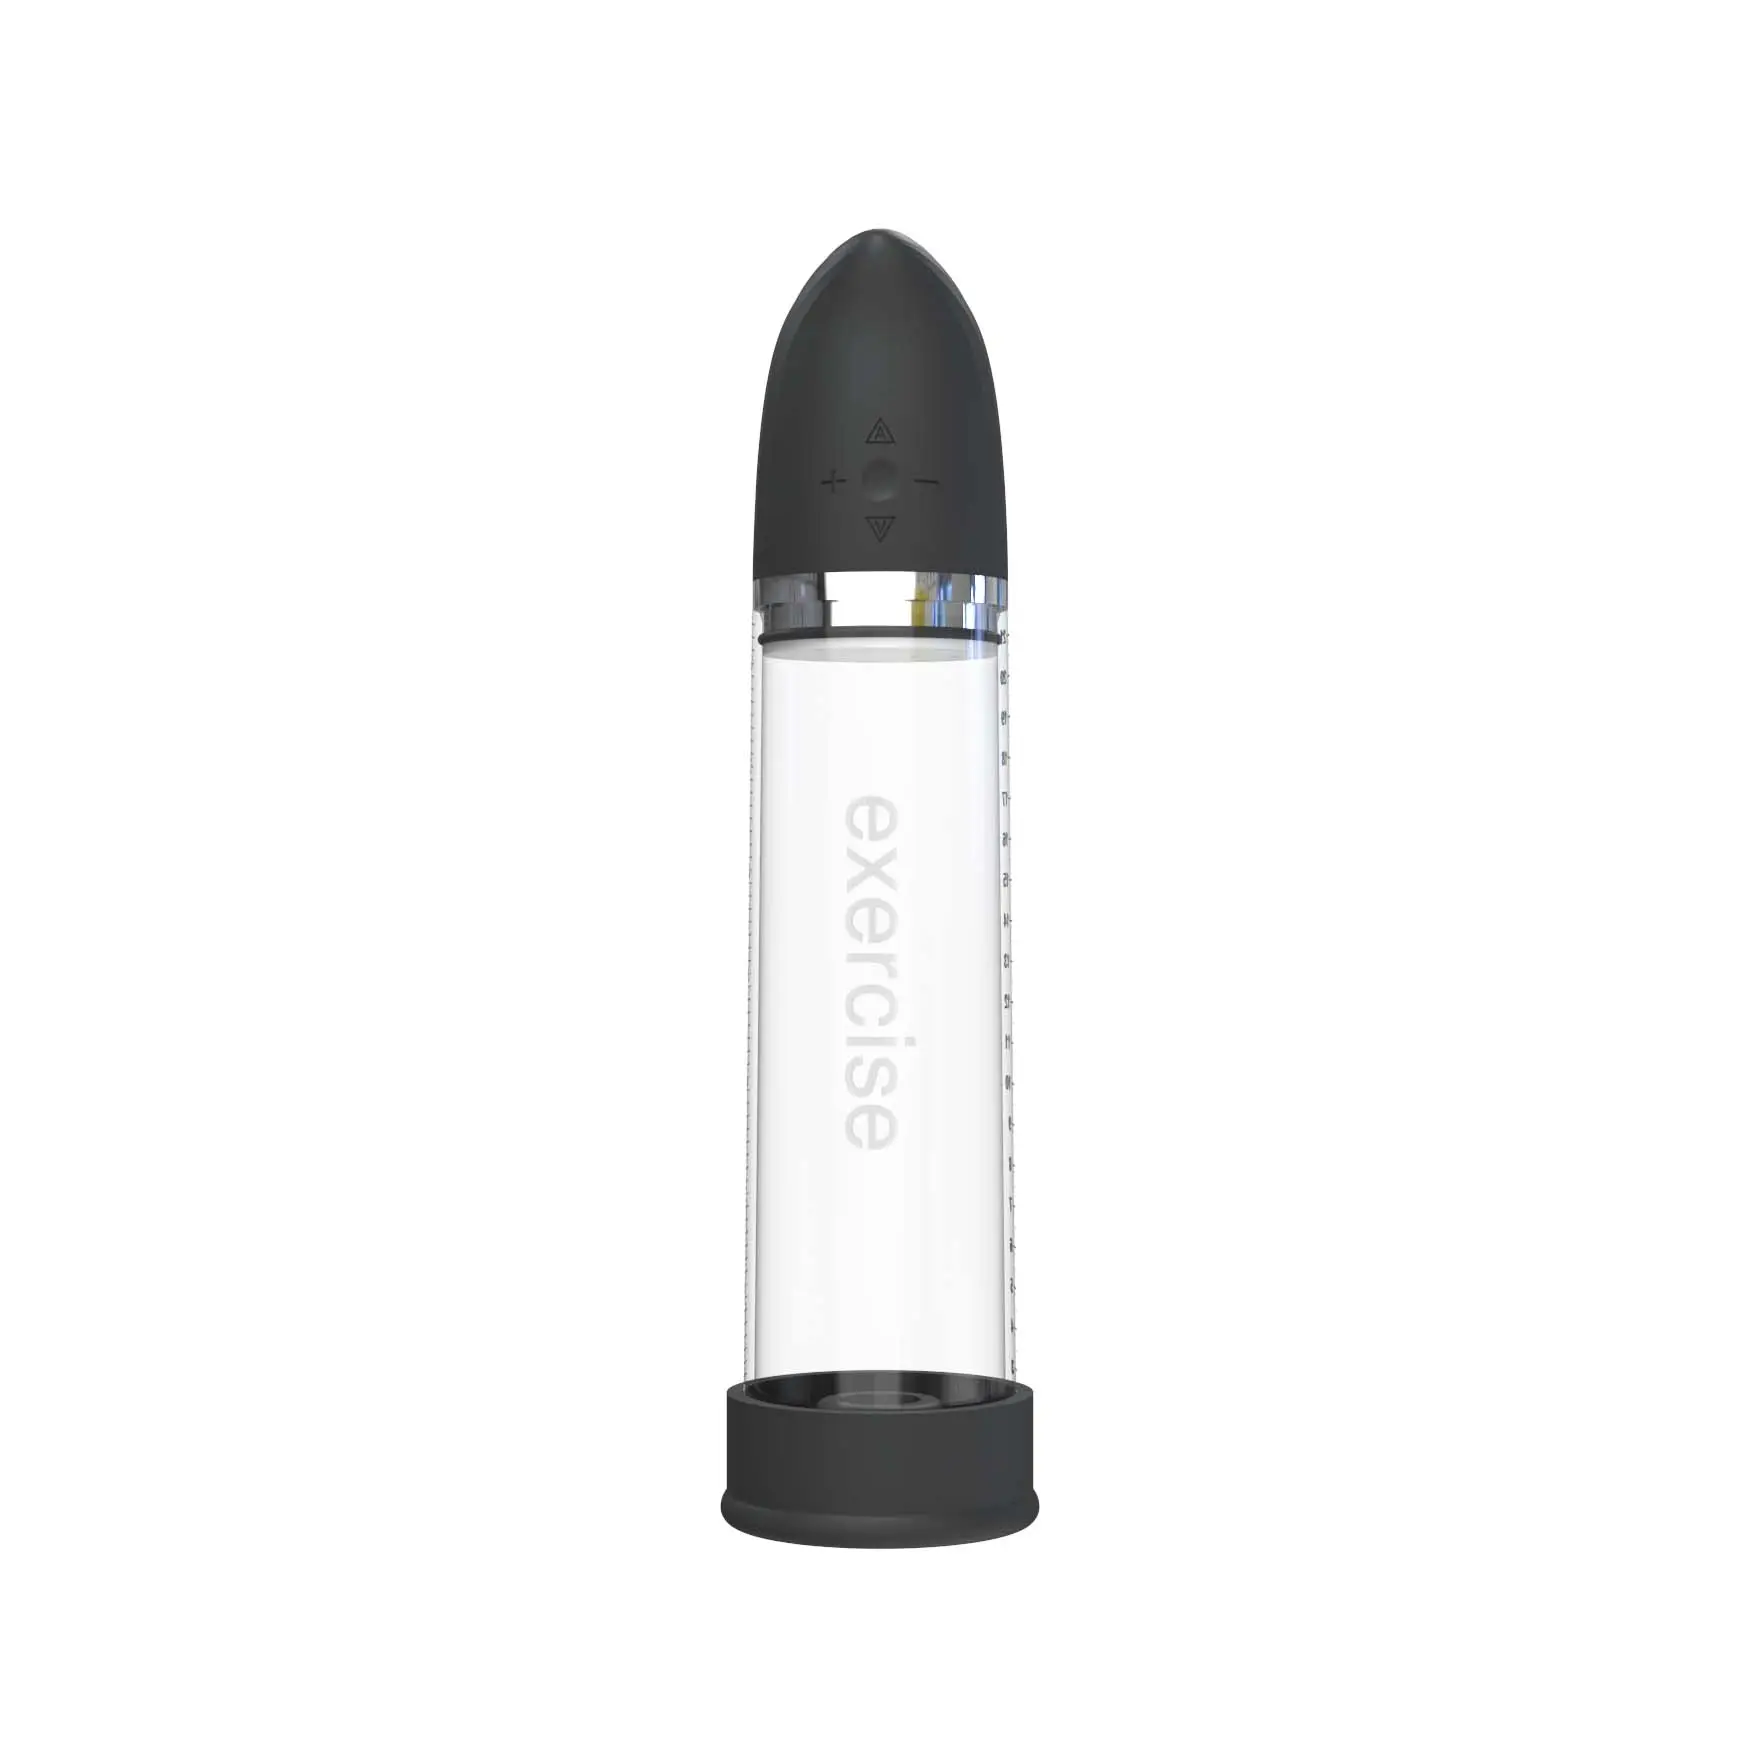 Hochwertige Vakuum Rubberbd Preis Male Pro extender Original Strong Male Enlarger Enhancer Vergrößerung und dickere Penis pumpe